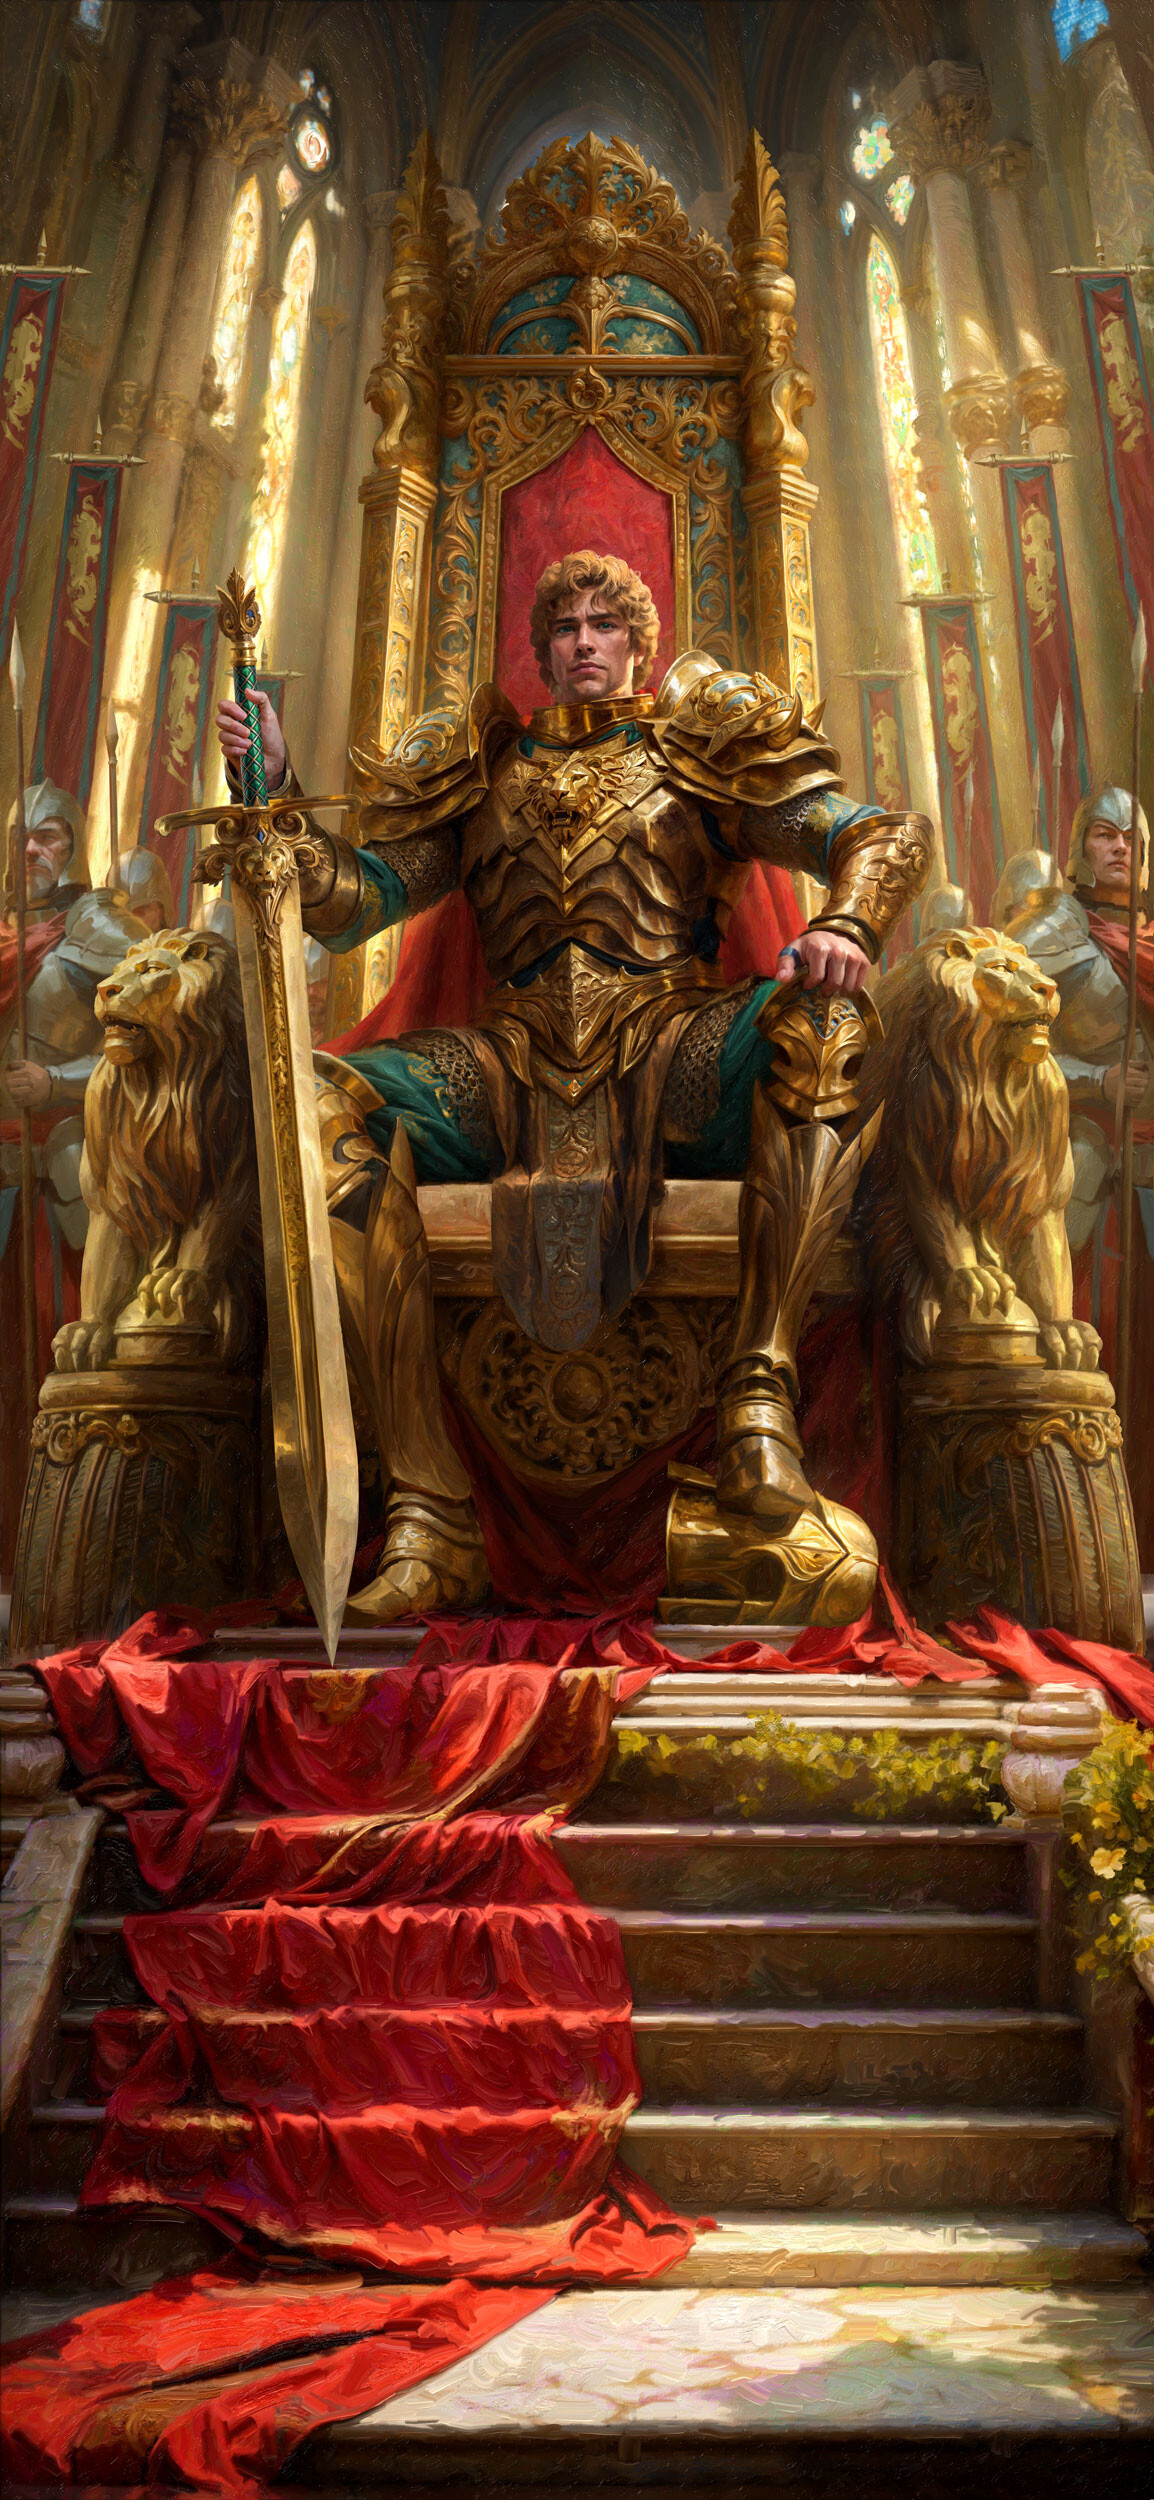 General 1154x2500 Wild Deer drawing warrior gold throne armor